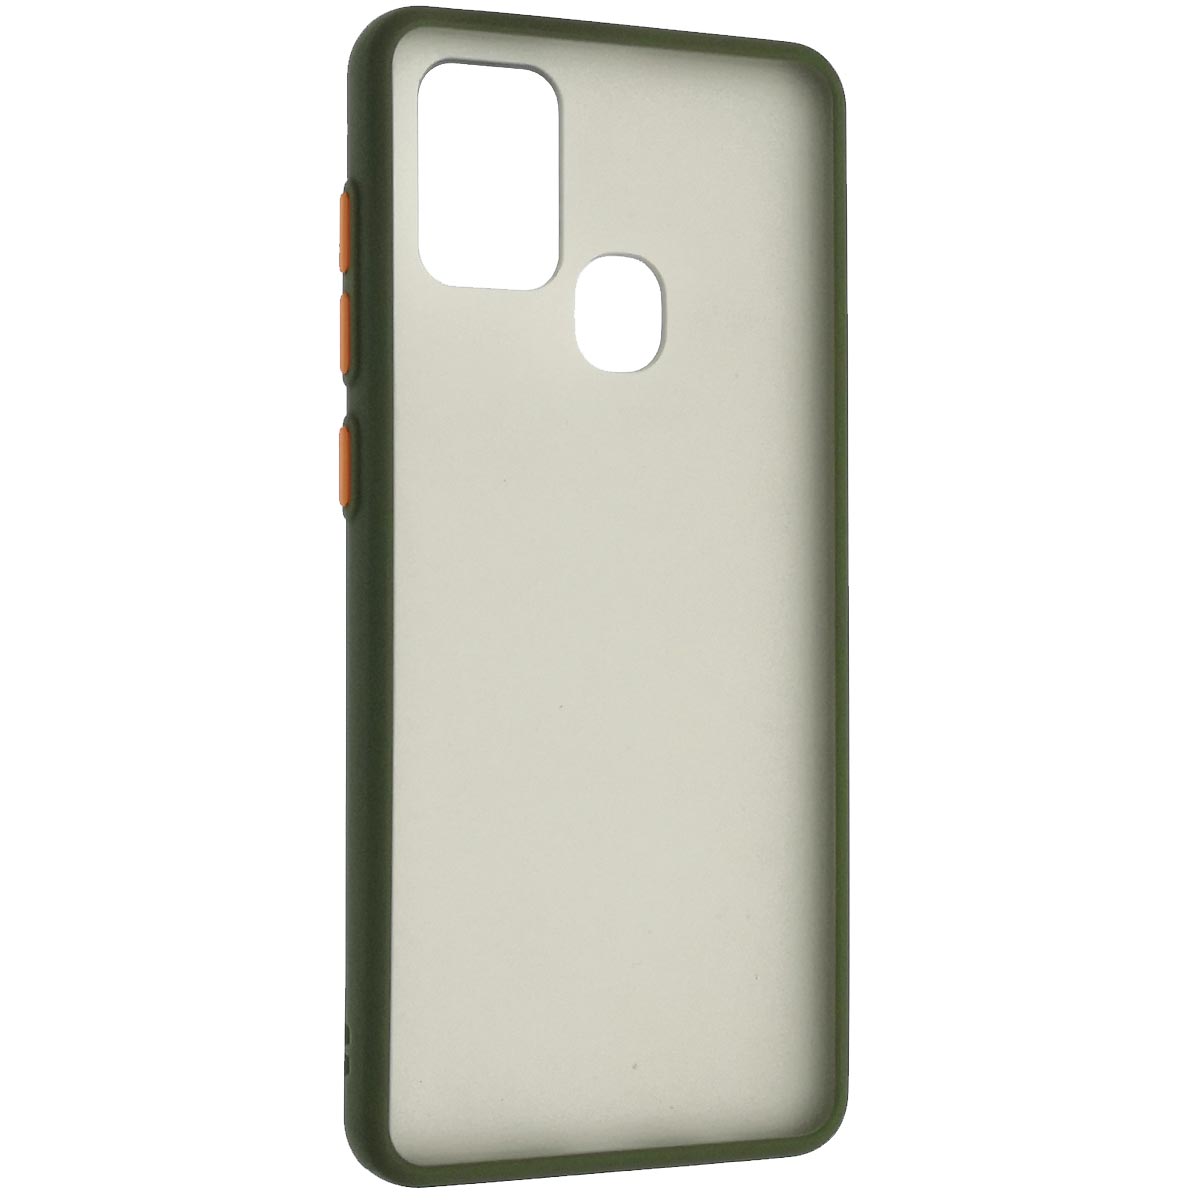 Чехол накладка SKIN SHELL для SAMSUNG Galaxy A21S (SM-A217F), силикон, пластик, цвет окантовки хаки